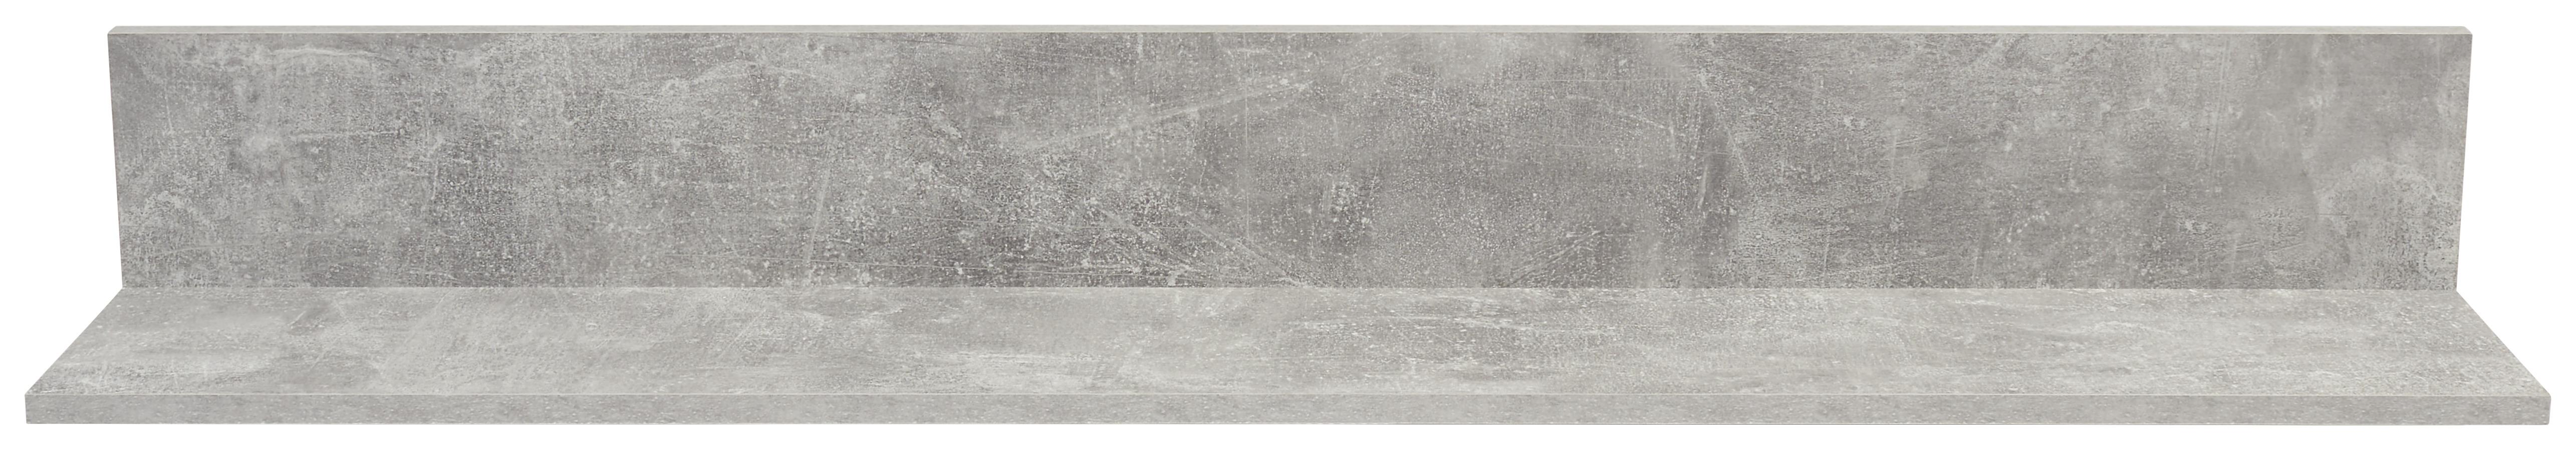 Wandboard Malta B:128cm, Betonoptik Hell Dekor - Grau, MODERN, Holzwerkstoff (128/18/20cm)